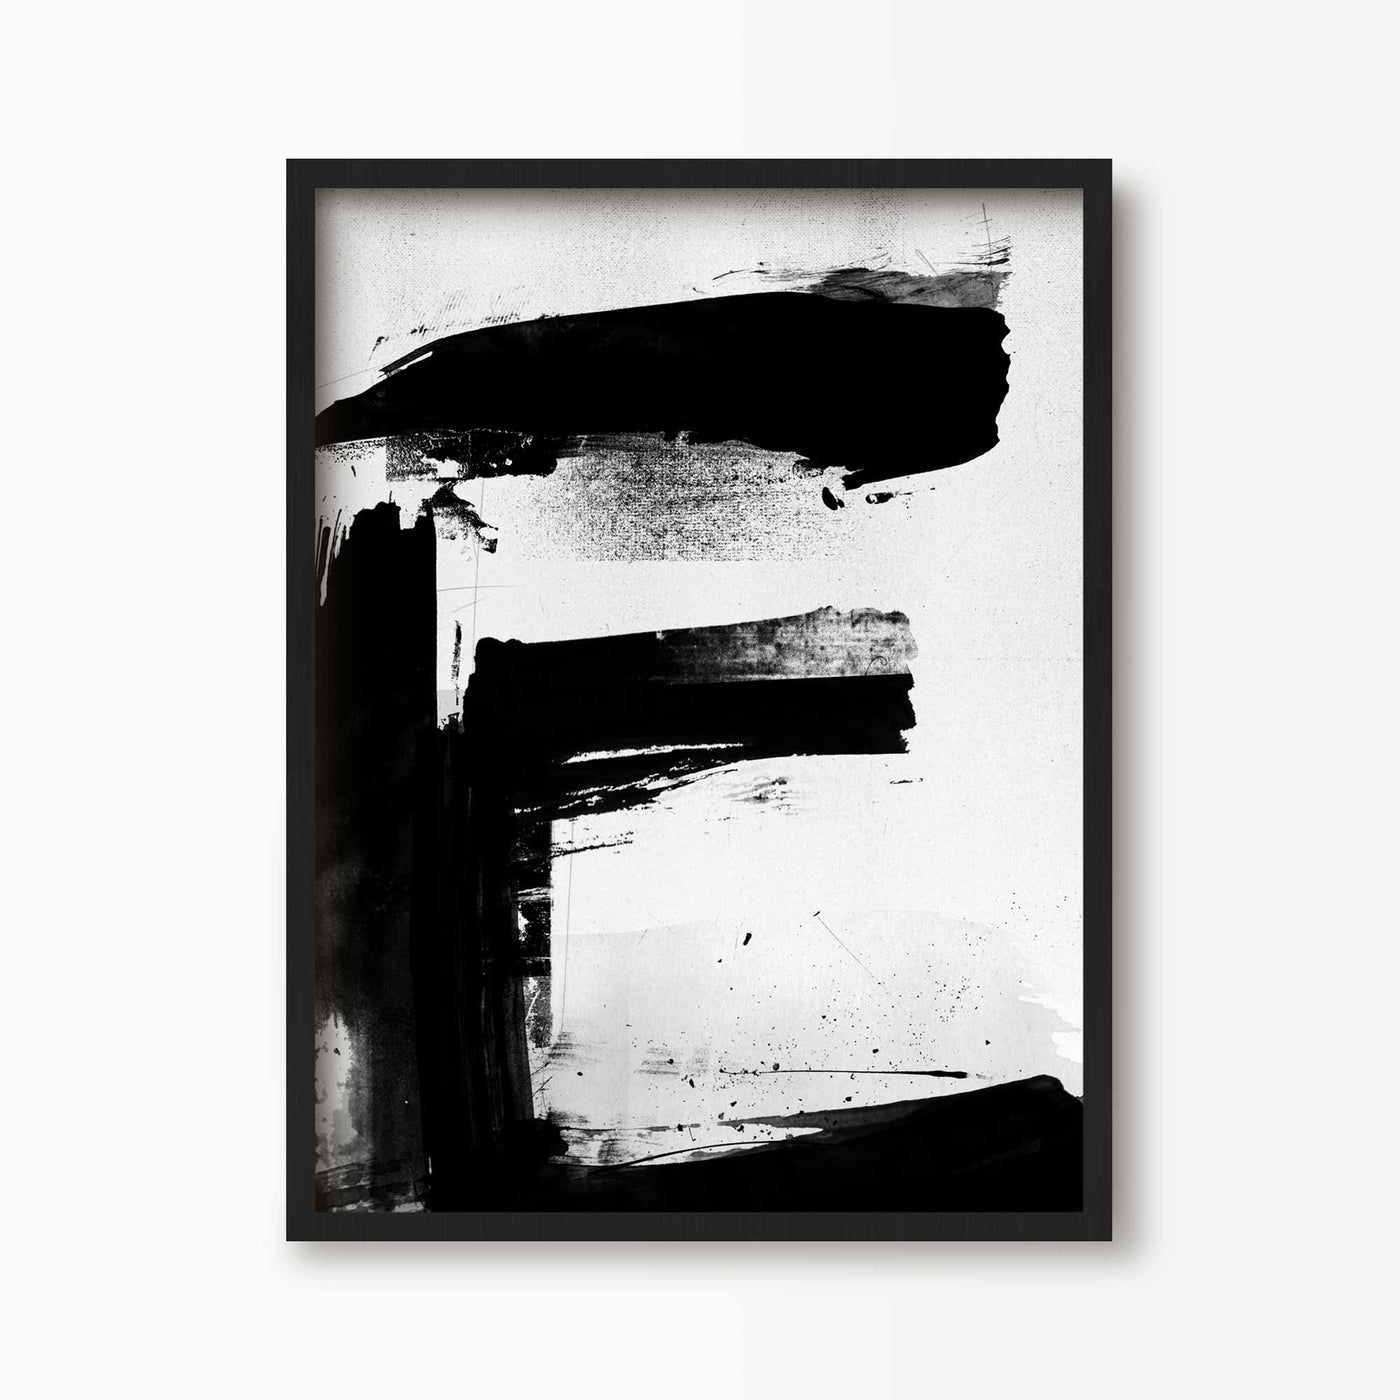 Green Lili E / 30x40cm (12x16") / Black Frame Abstract Letter Art Prints (A-M)